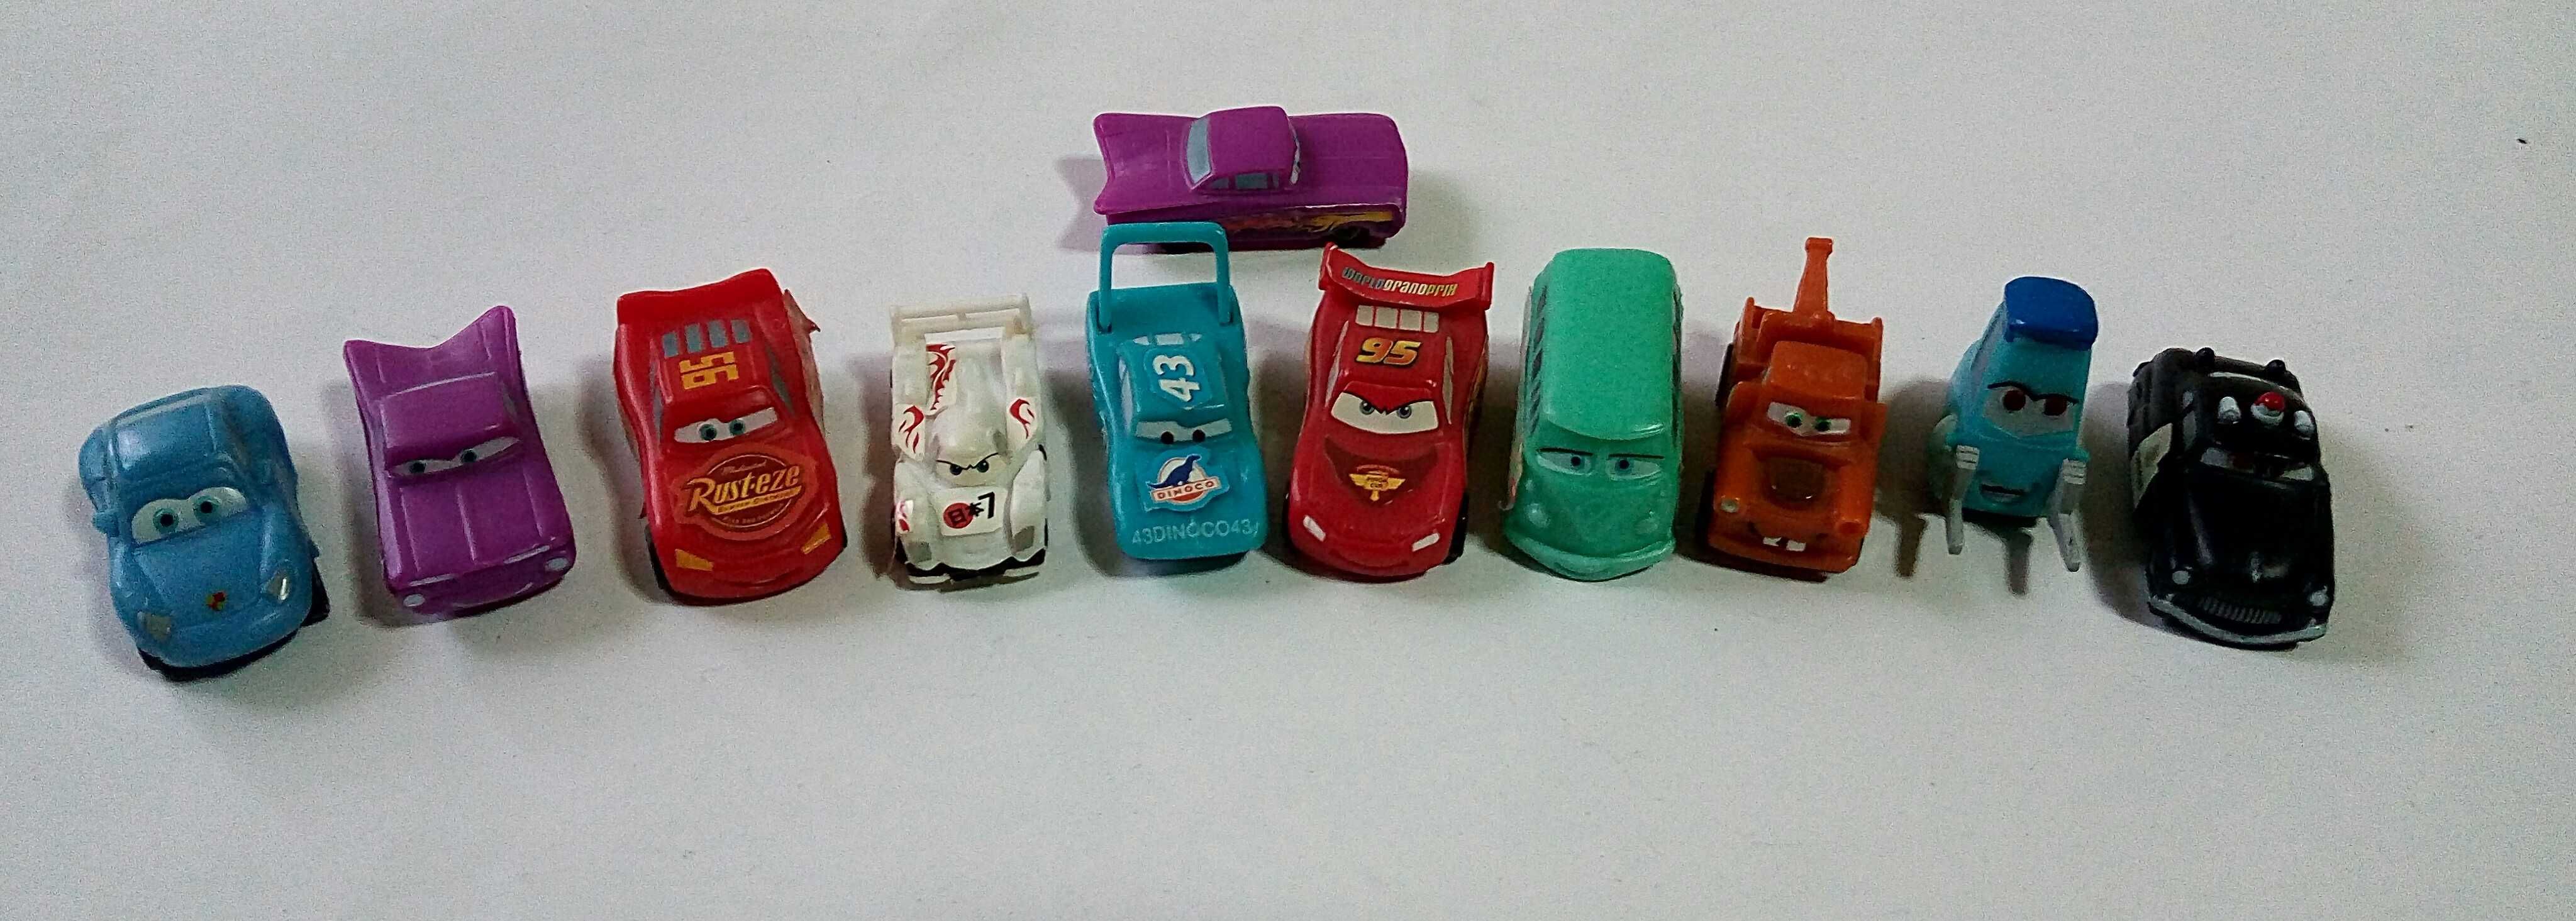 Lot mașinuțe ,,Cars" 2-3 cm.